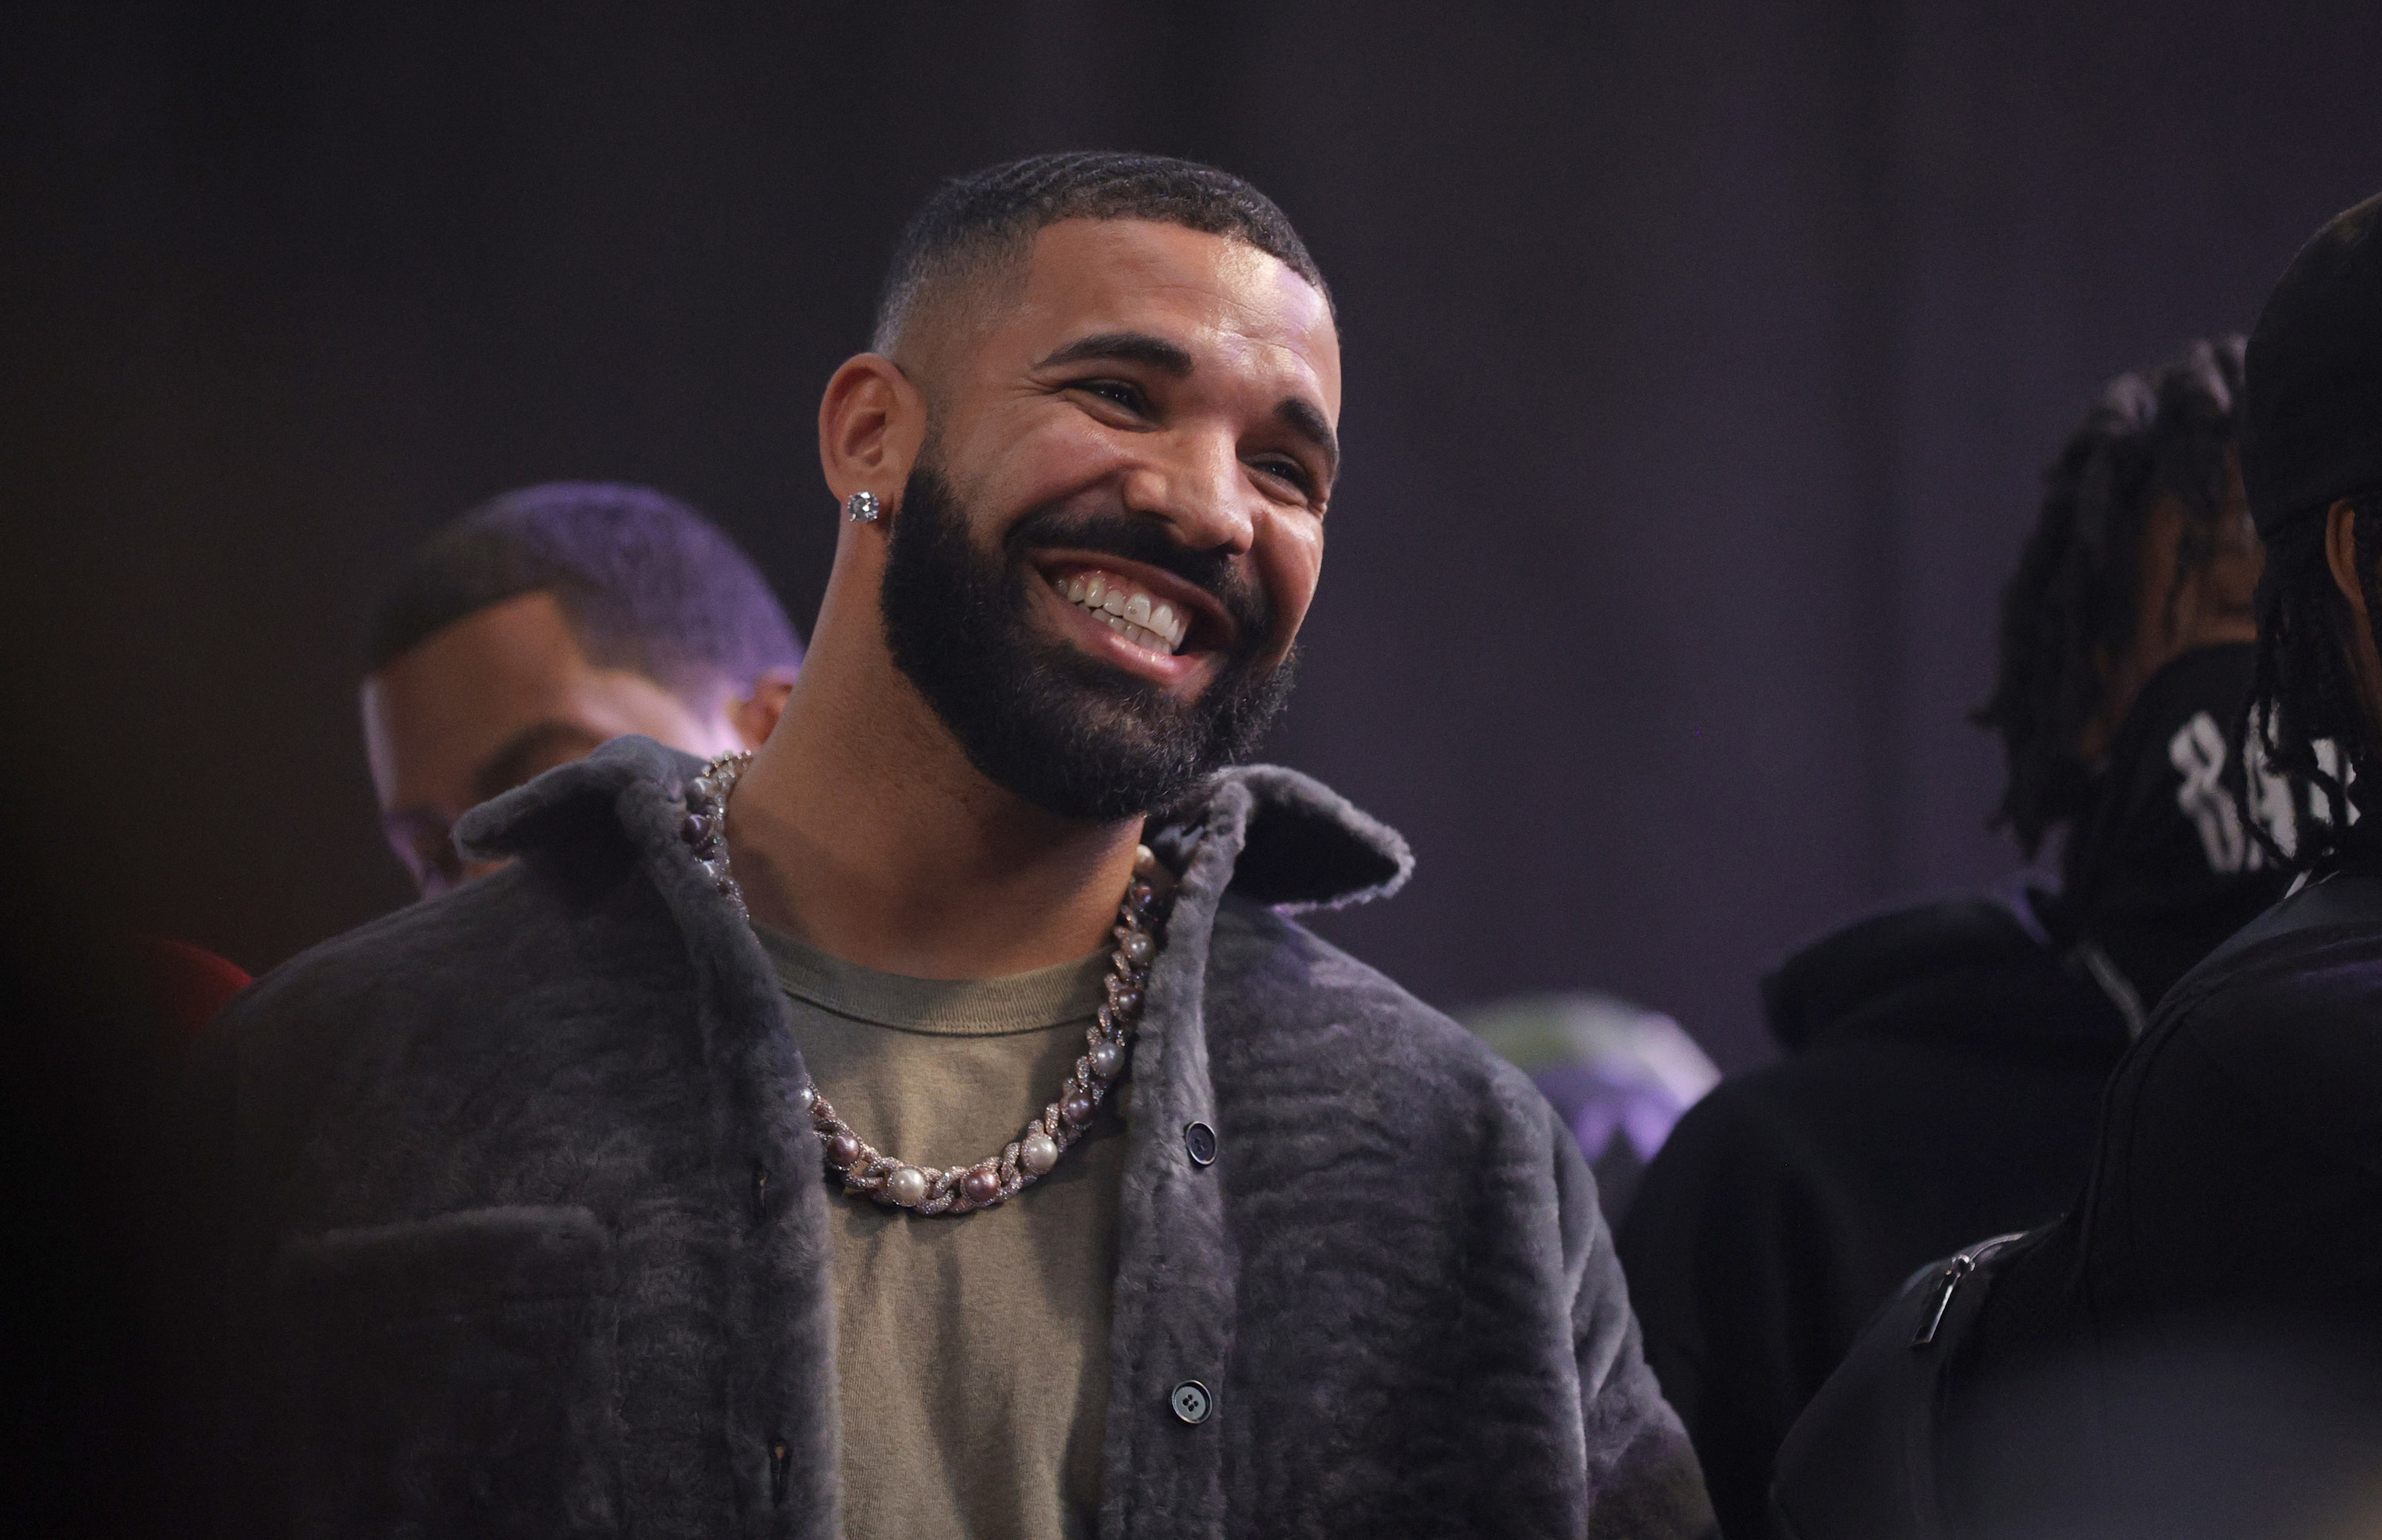 Drake smiling with people behind him